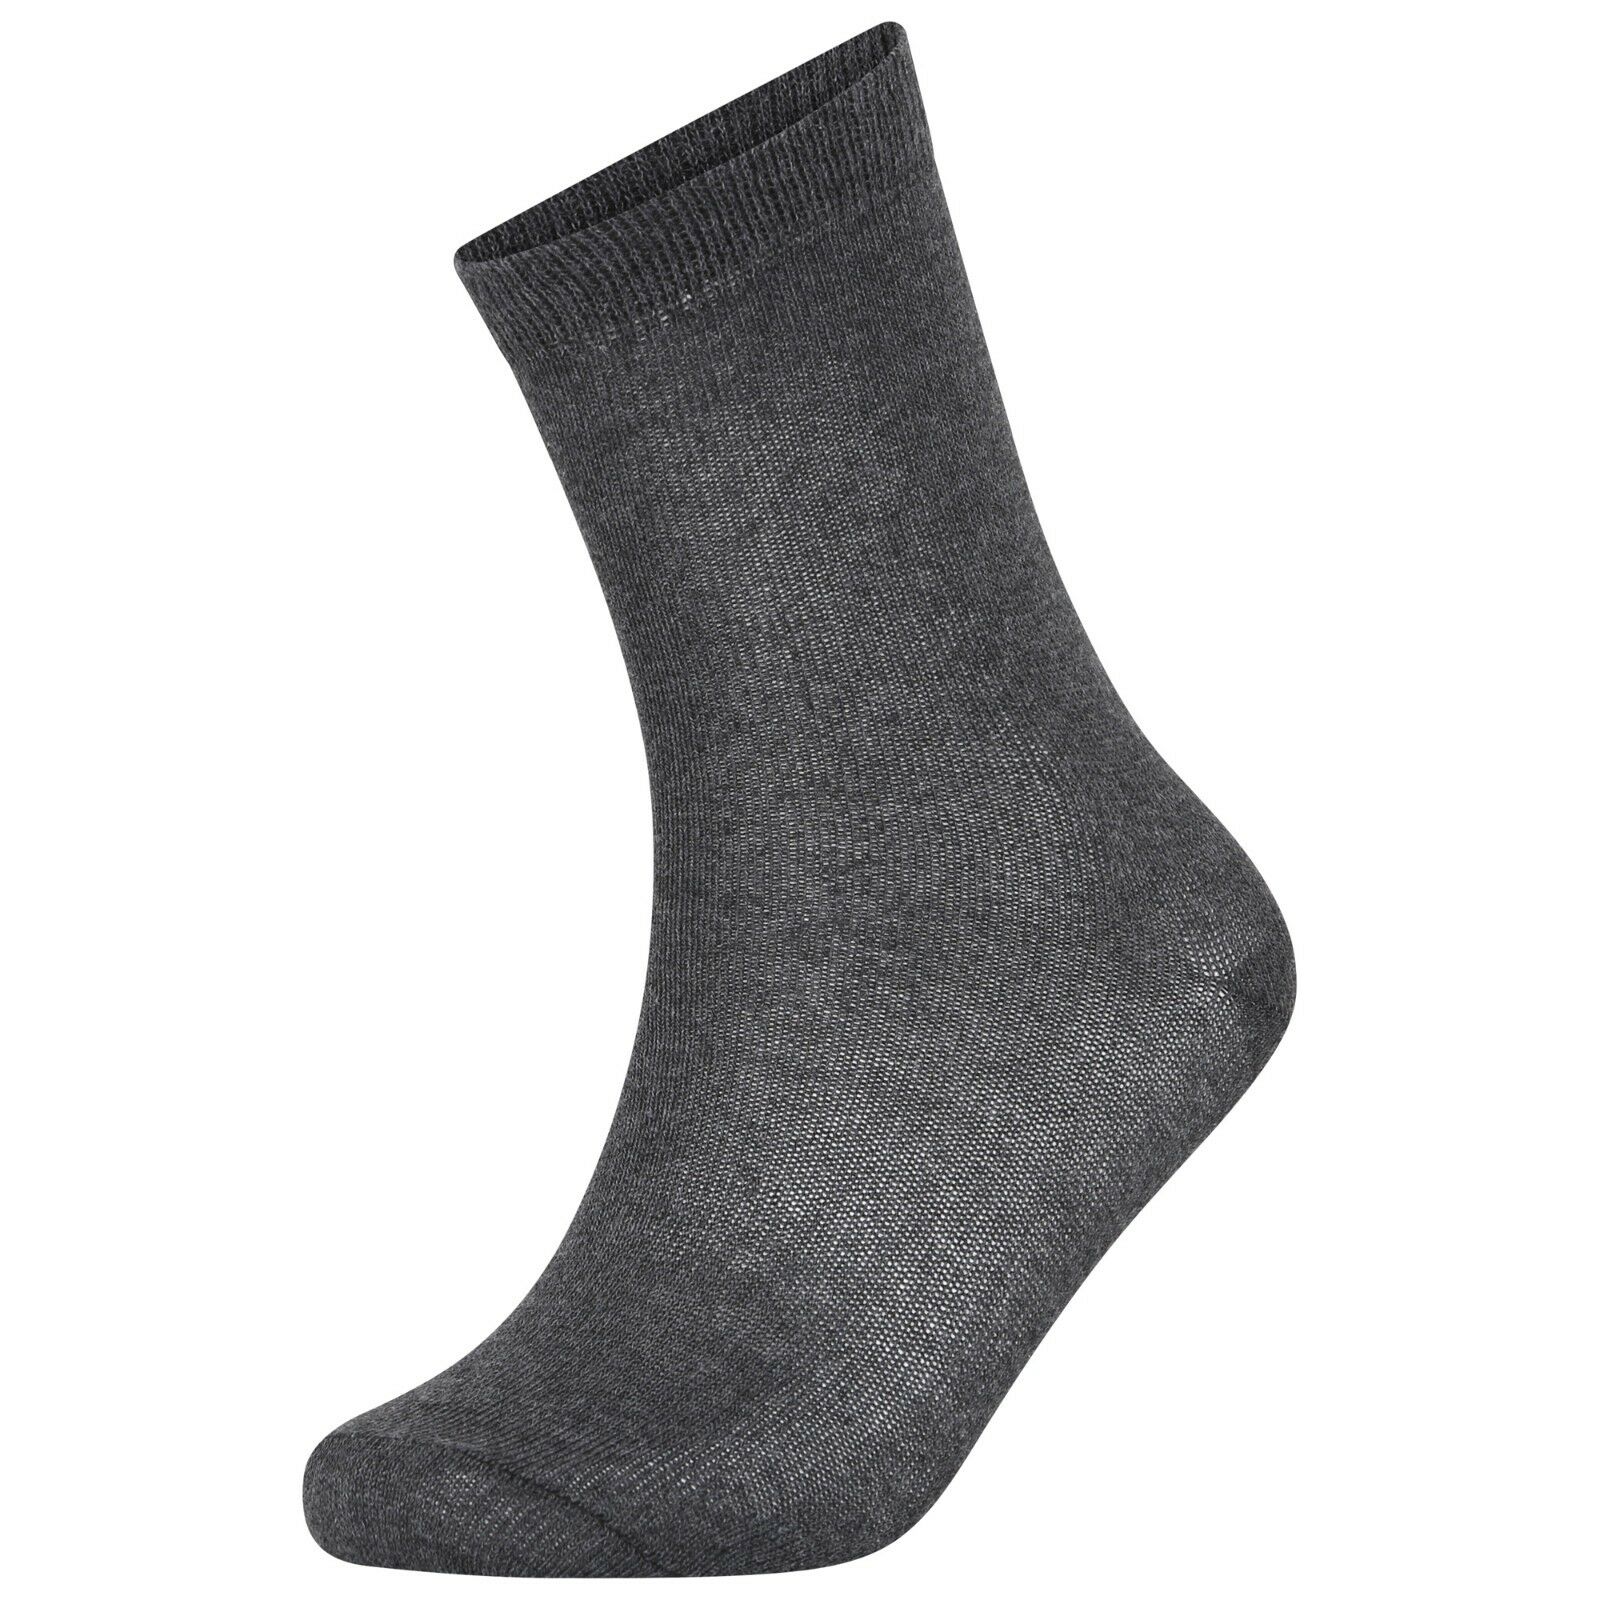 12 Pairs Ankle Socks  Girls Boys Unisex Children's Kids Plain Cotton Mix Back to School Socks  -Grey / Charcoal